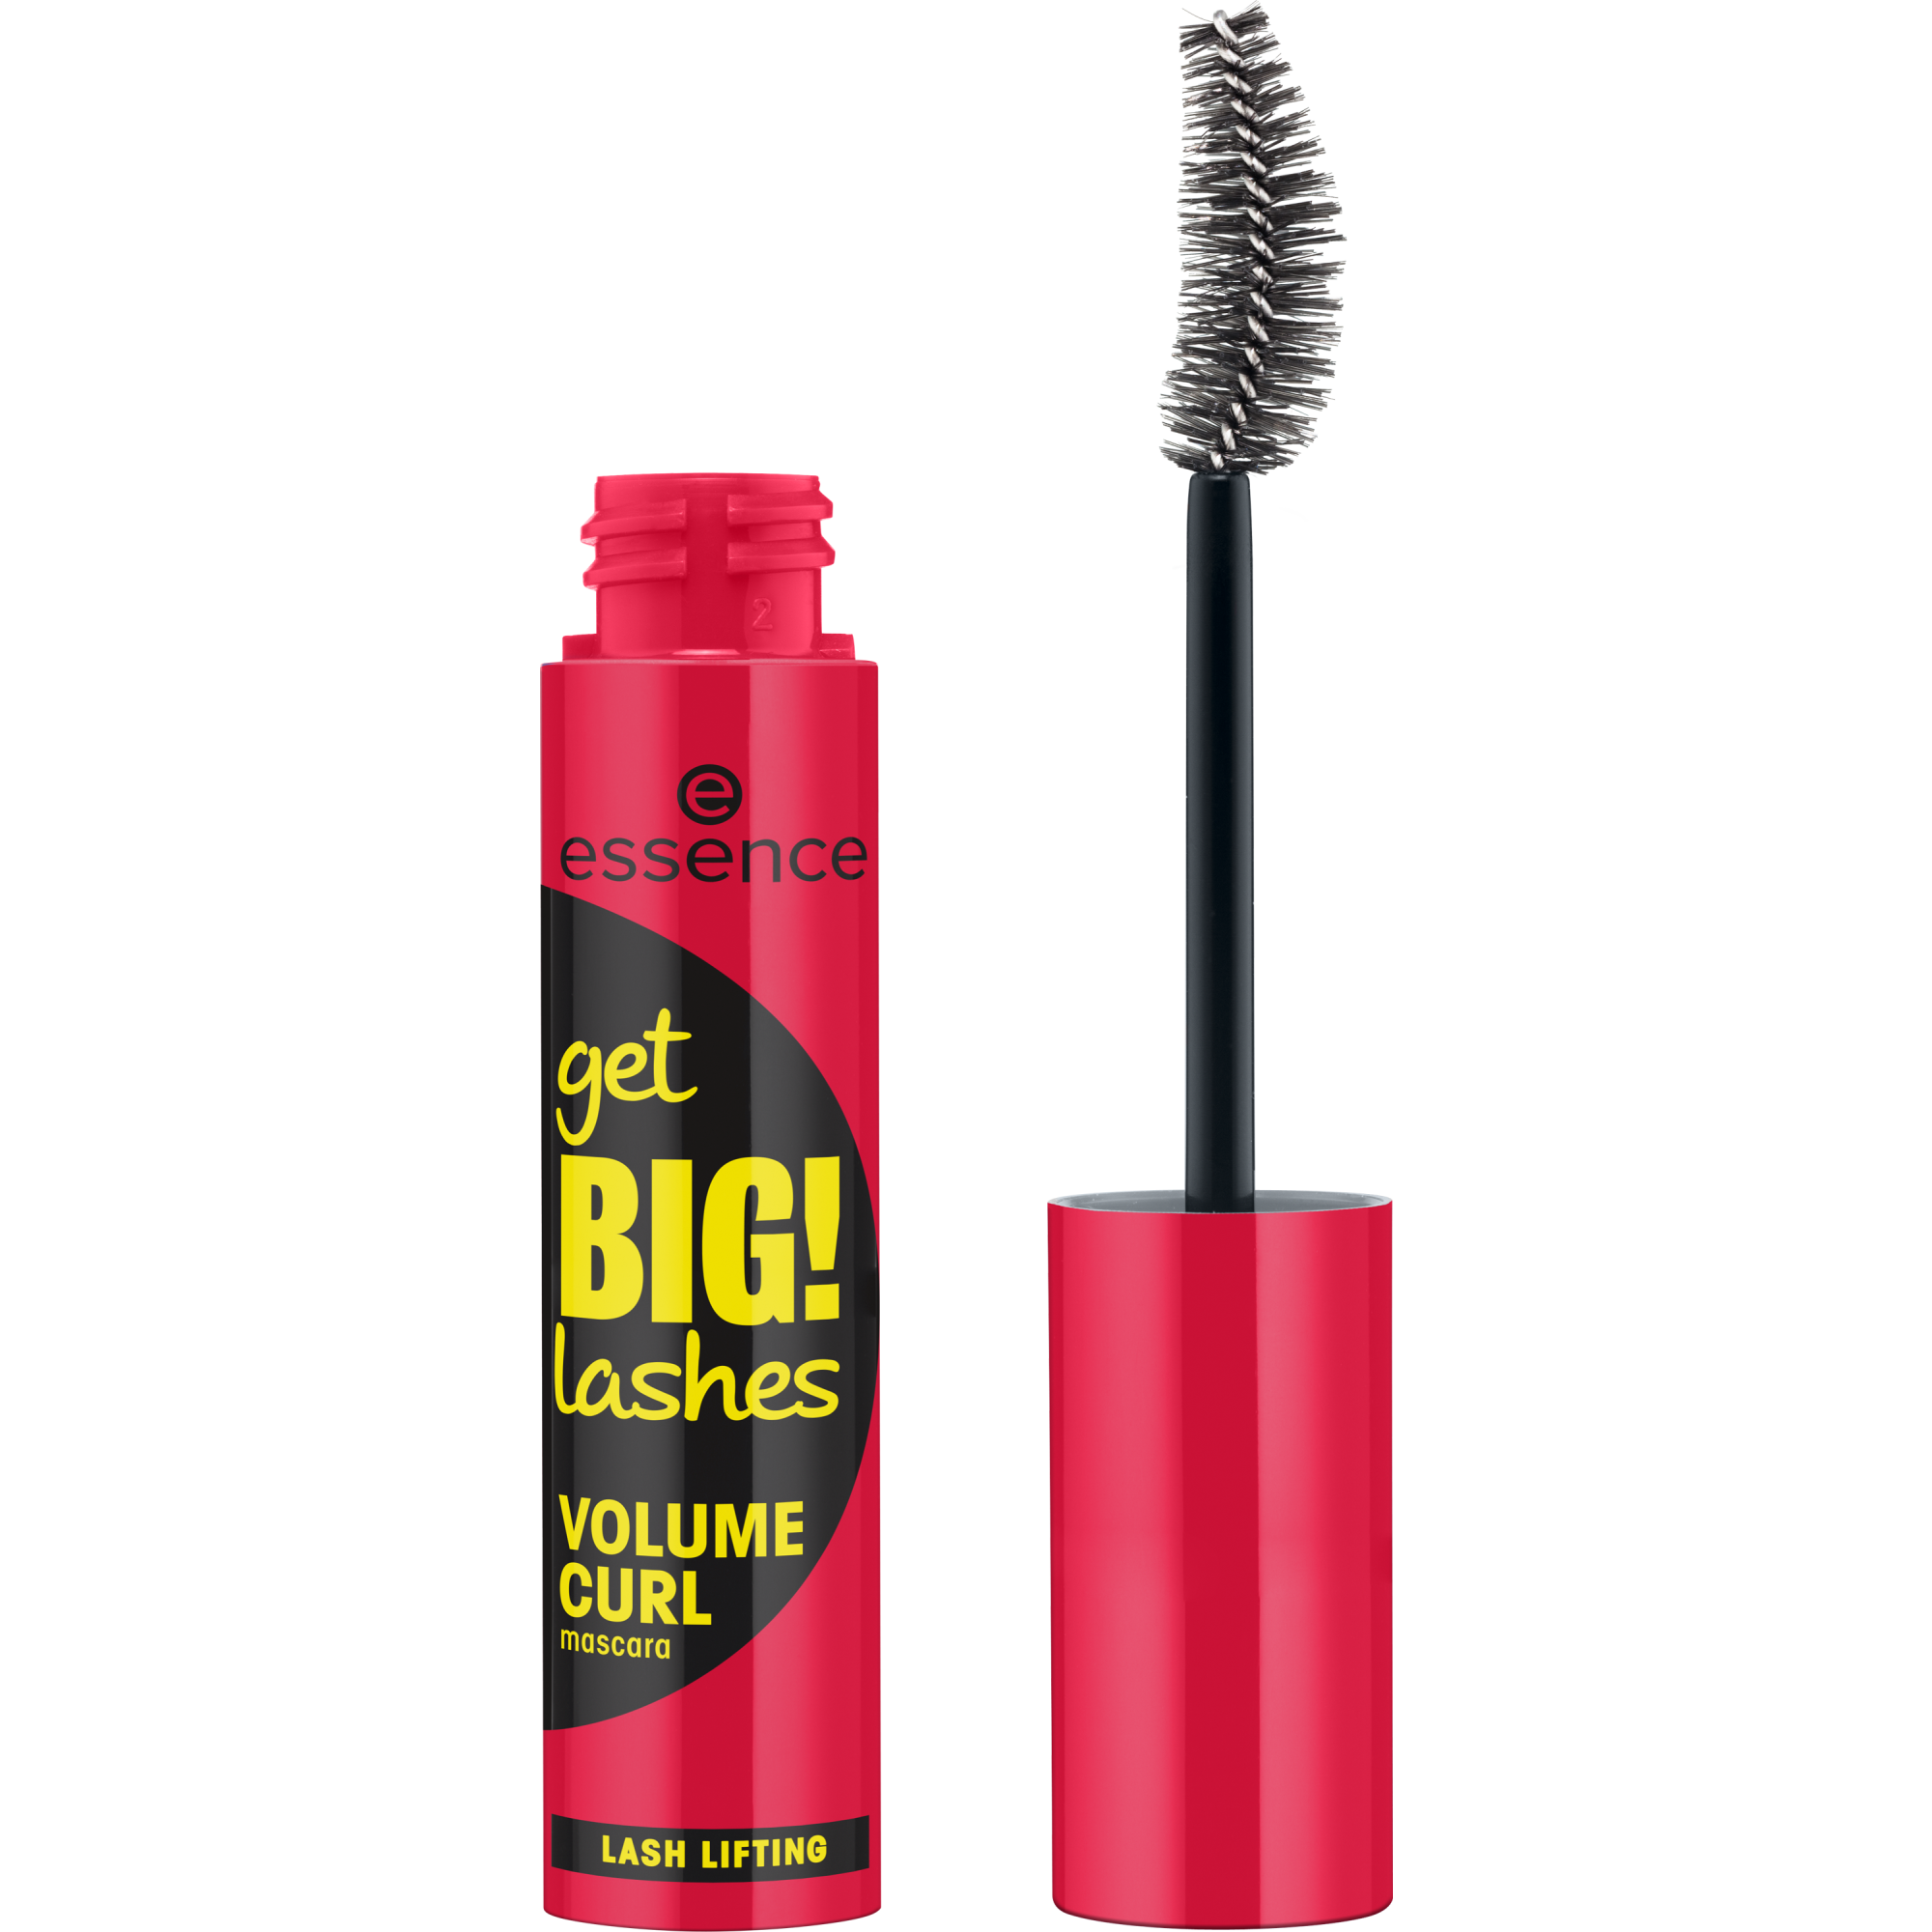 get BIG! lashes VOLUME CURL mascara